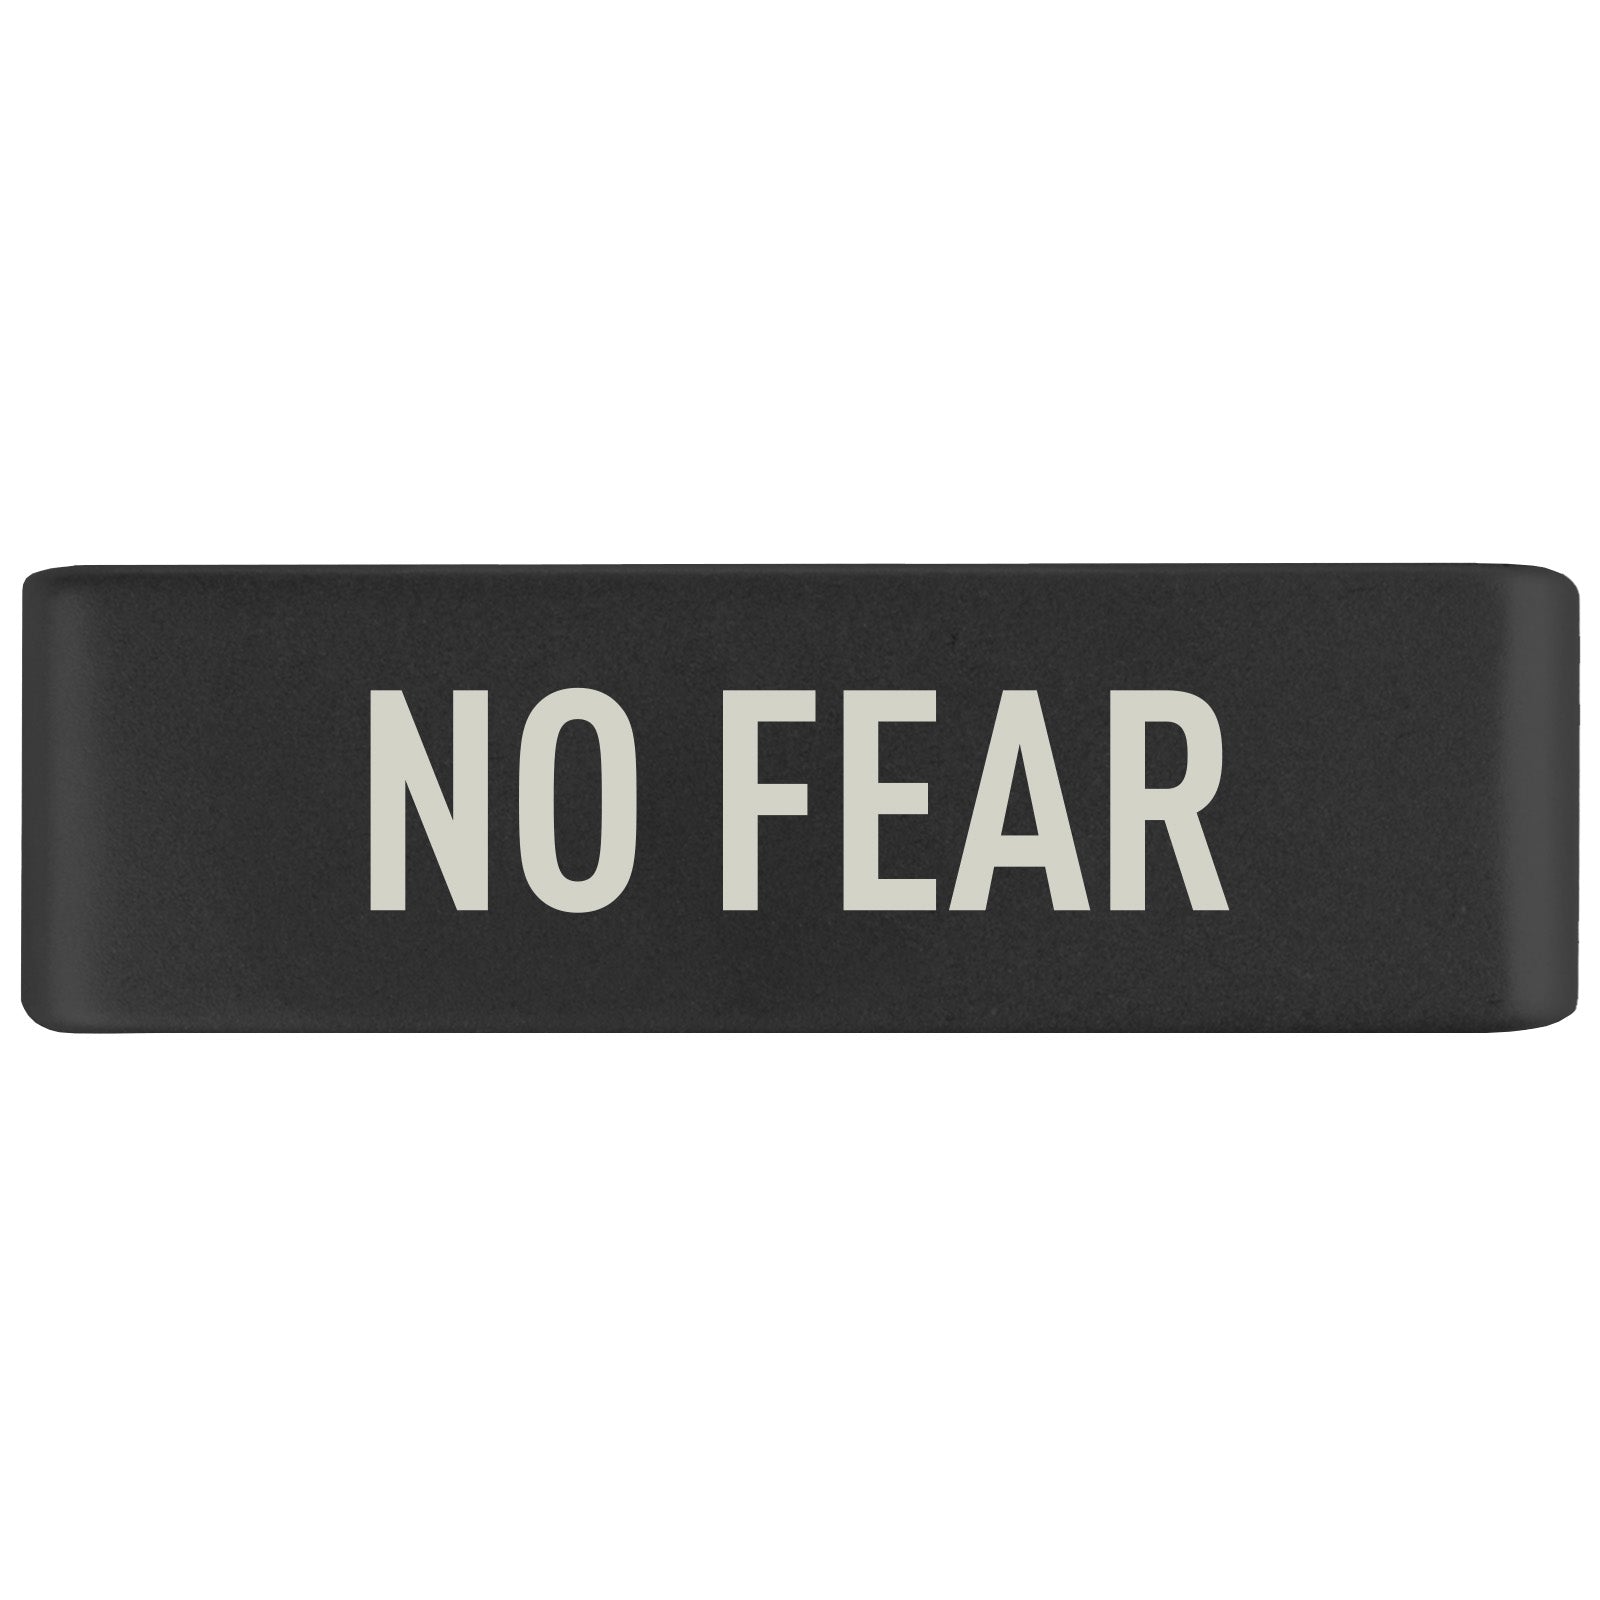 No Fear Badge Badge 19mm - ROAD iD